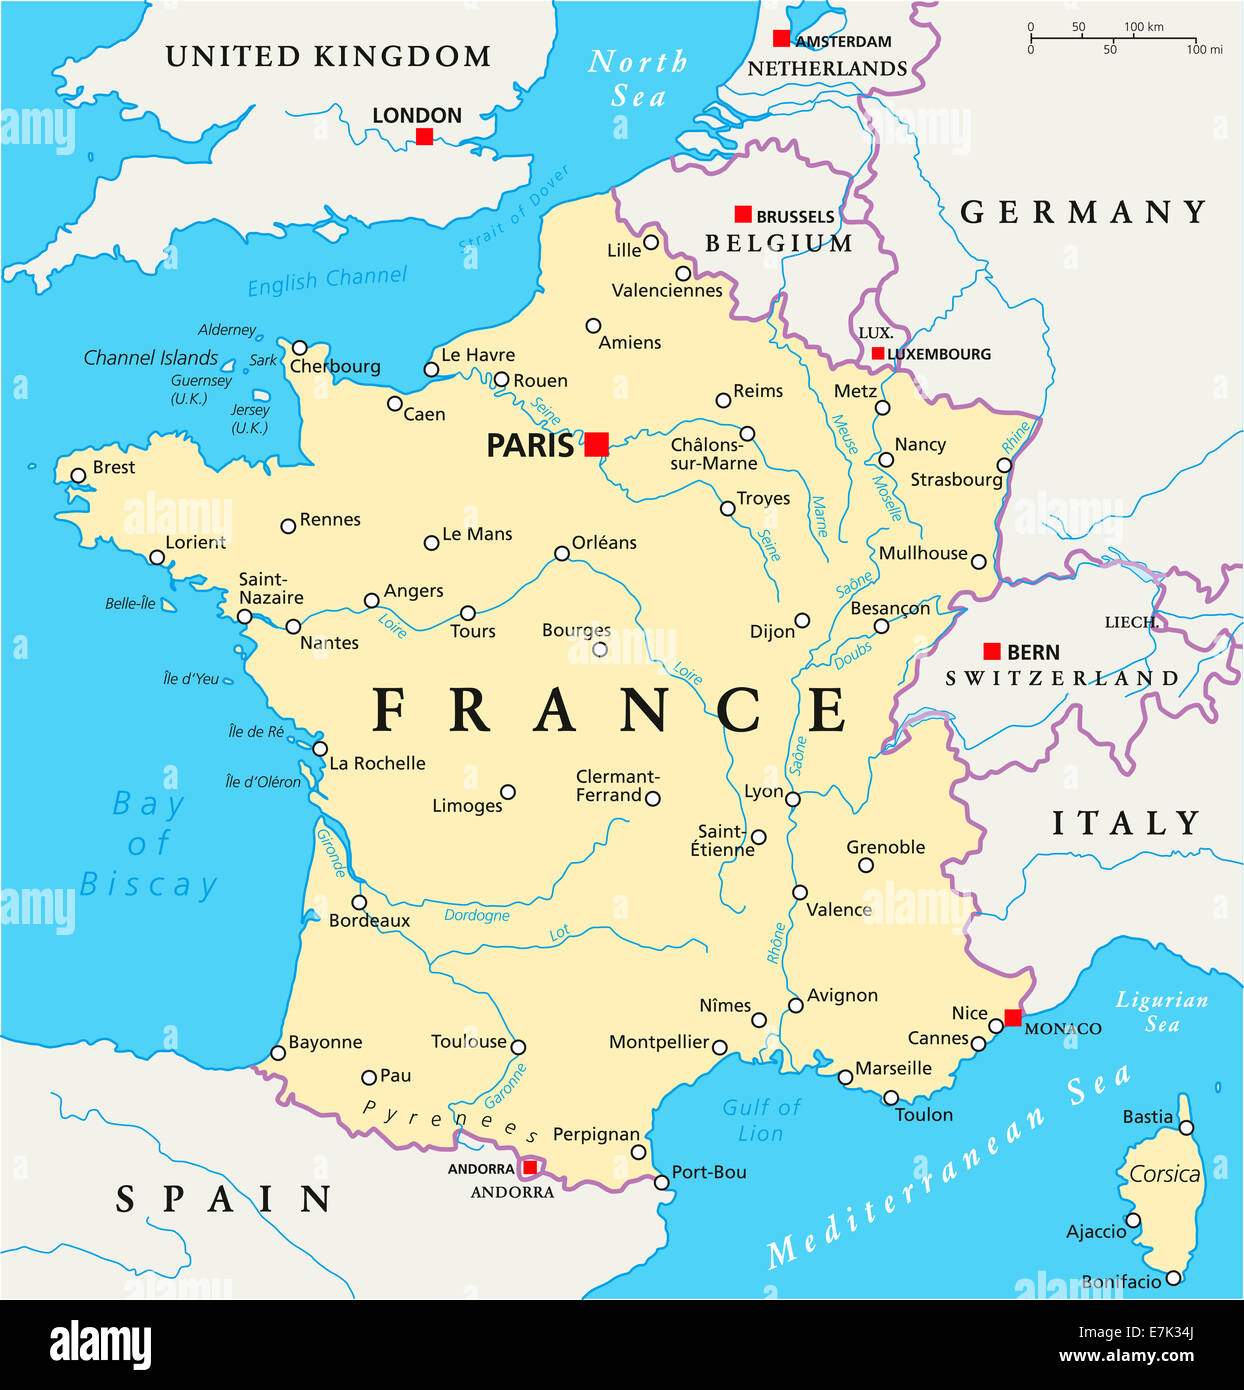 Paris Map Europe